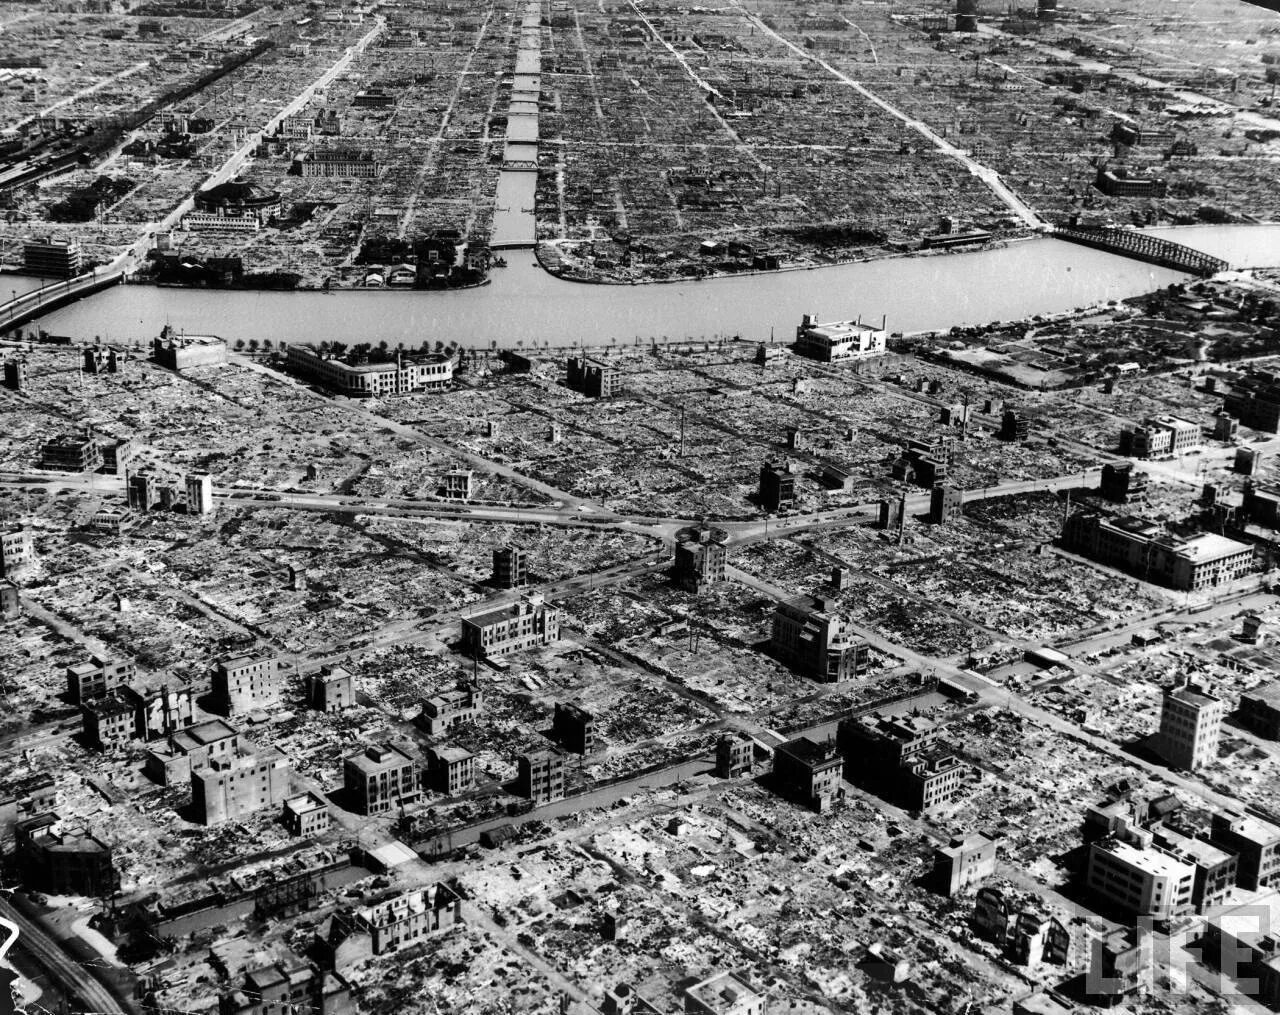 Нагасаки после ядерного взрыва. Япония 1945 Хиросима и Нагасаки.